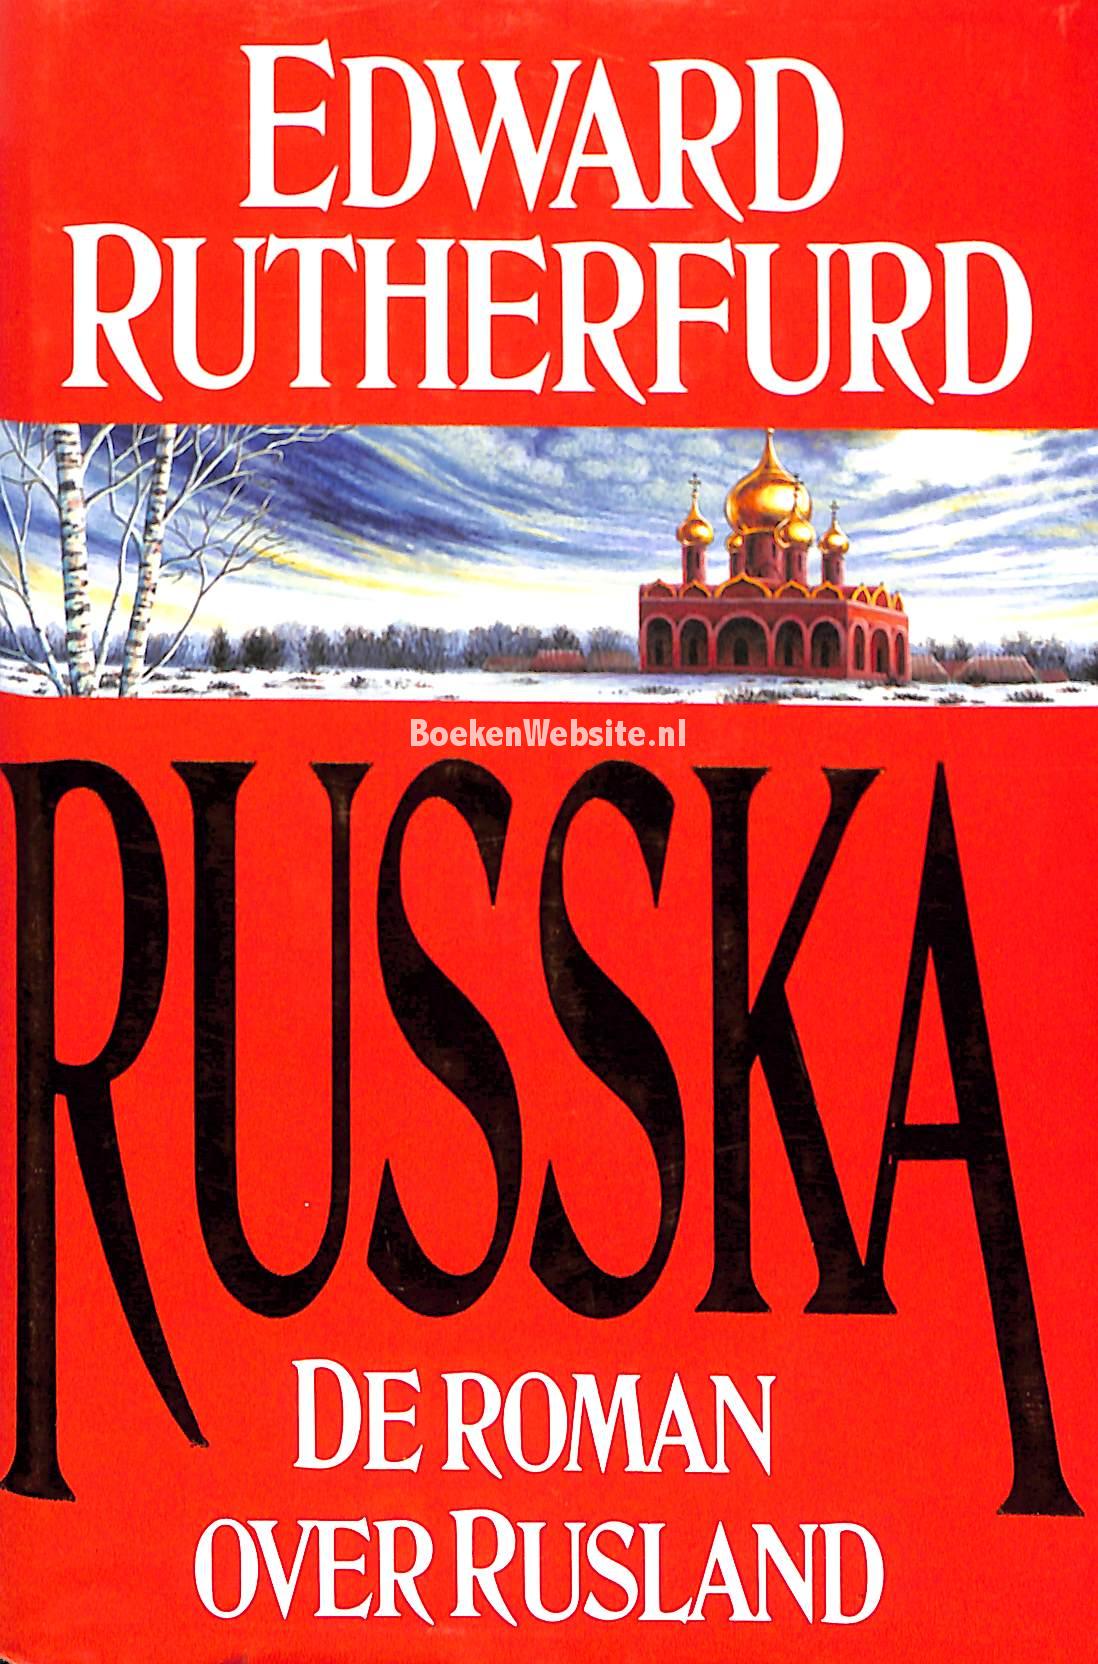 russka rutherfurd